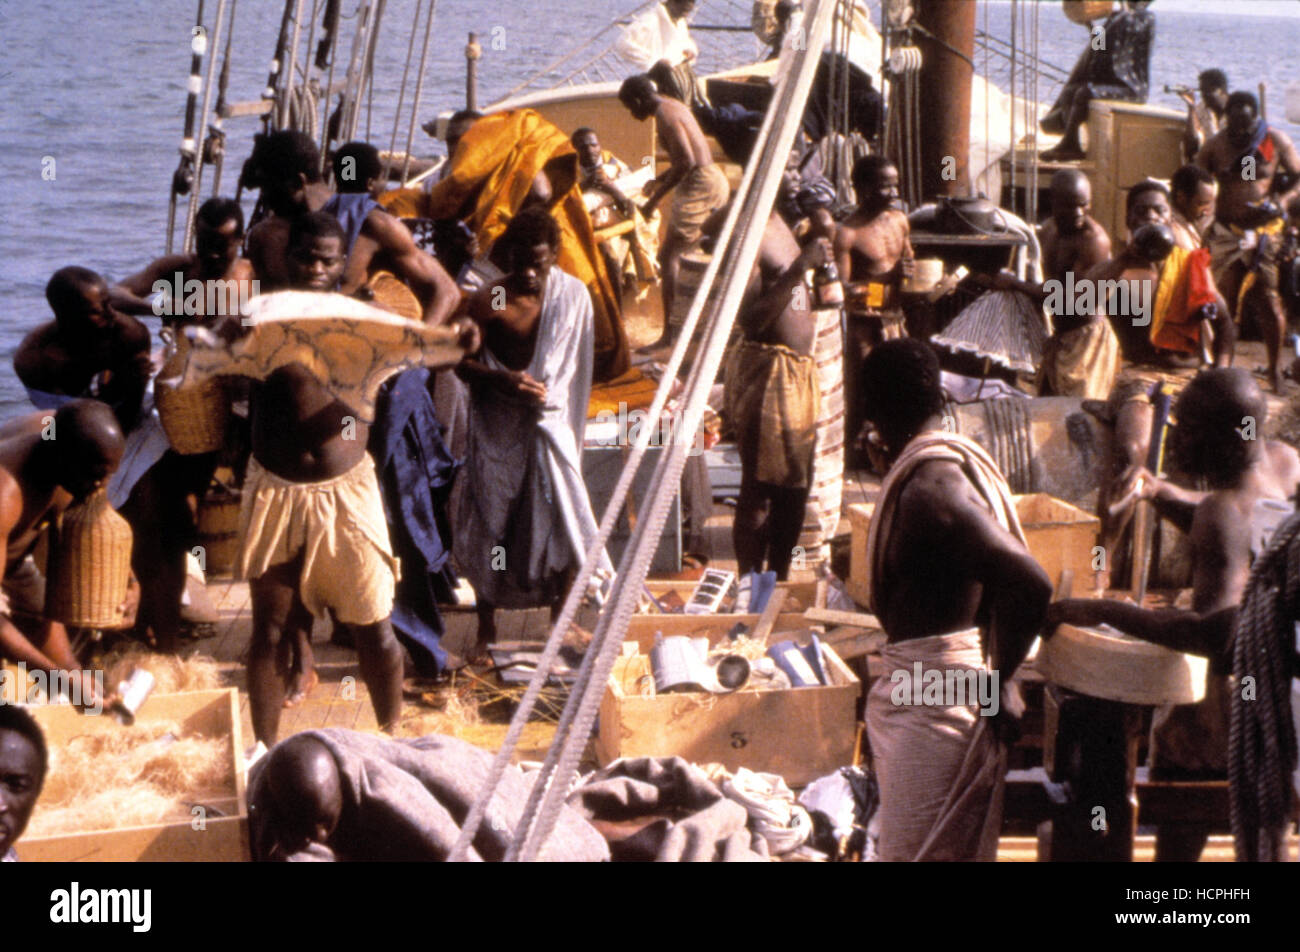 AMISTAD, 1997, Slaves take over the ship. DreamWorks SKG/Courtesy Everett Collection Stock Photo